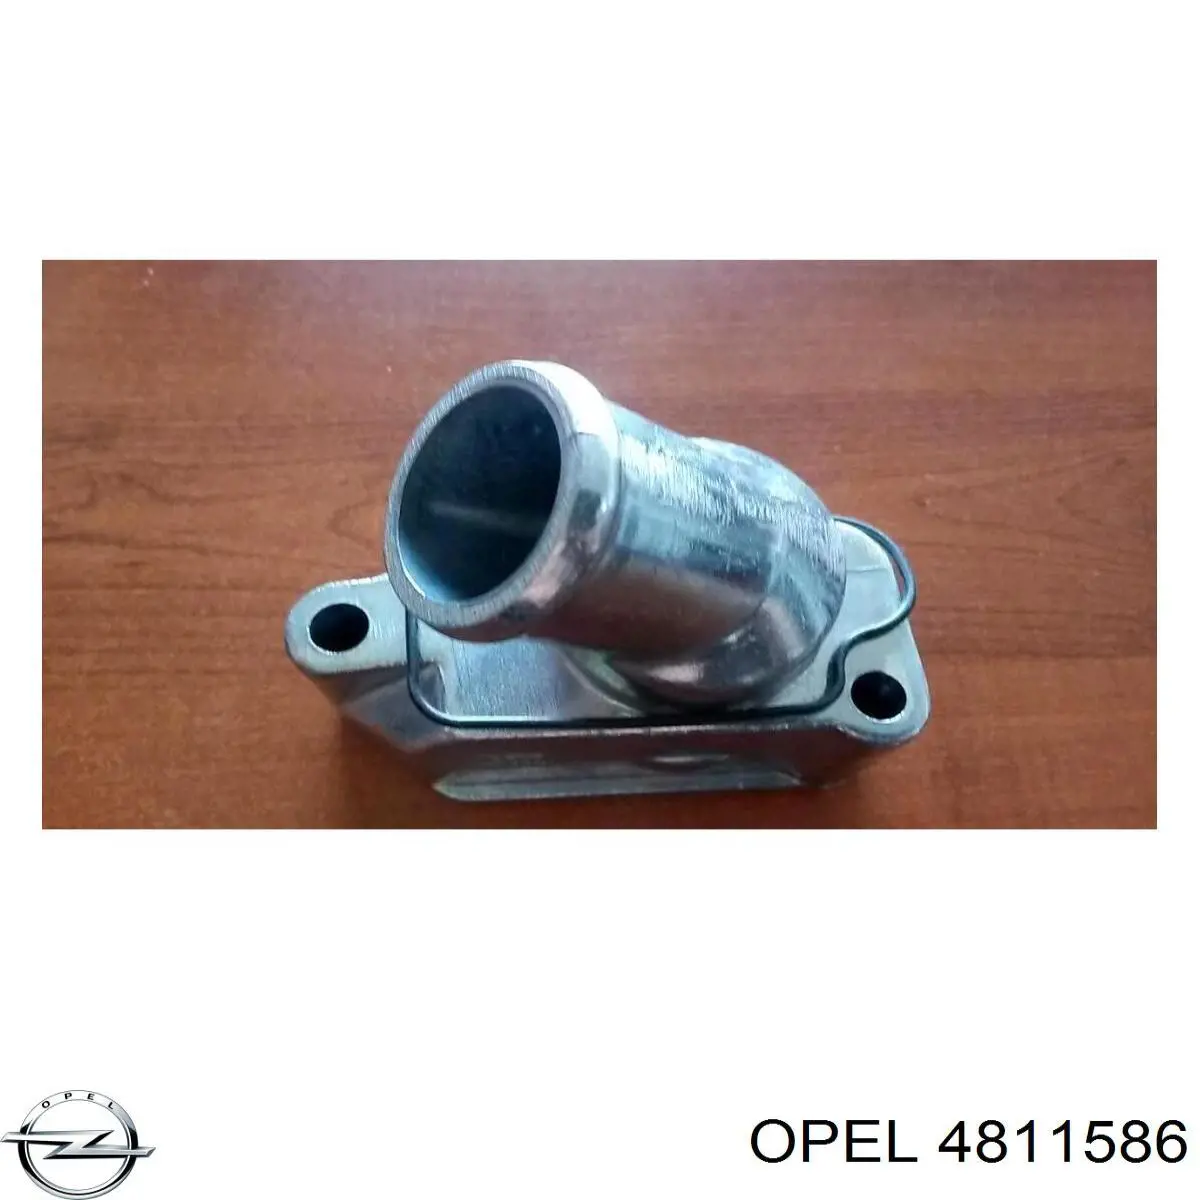 4811586 Opel termostato